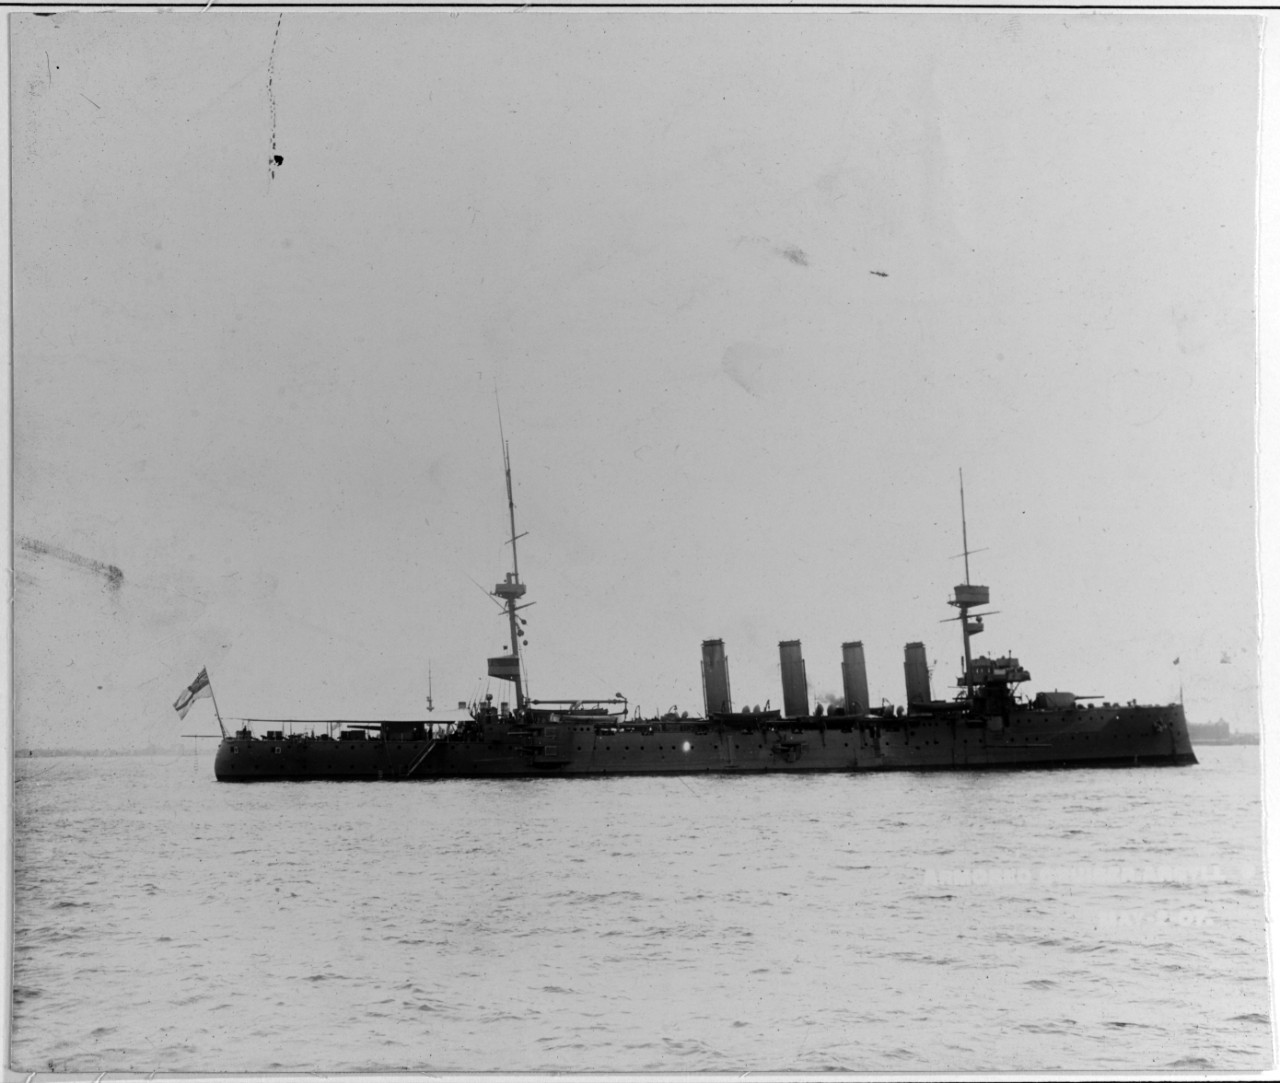 HMS ARGYLL (British armored cruiser, 1904)